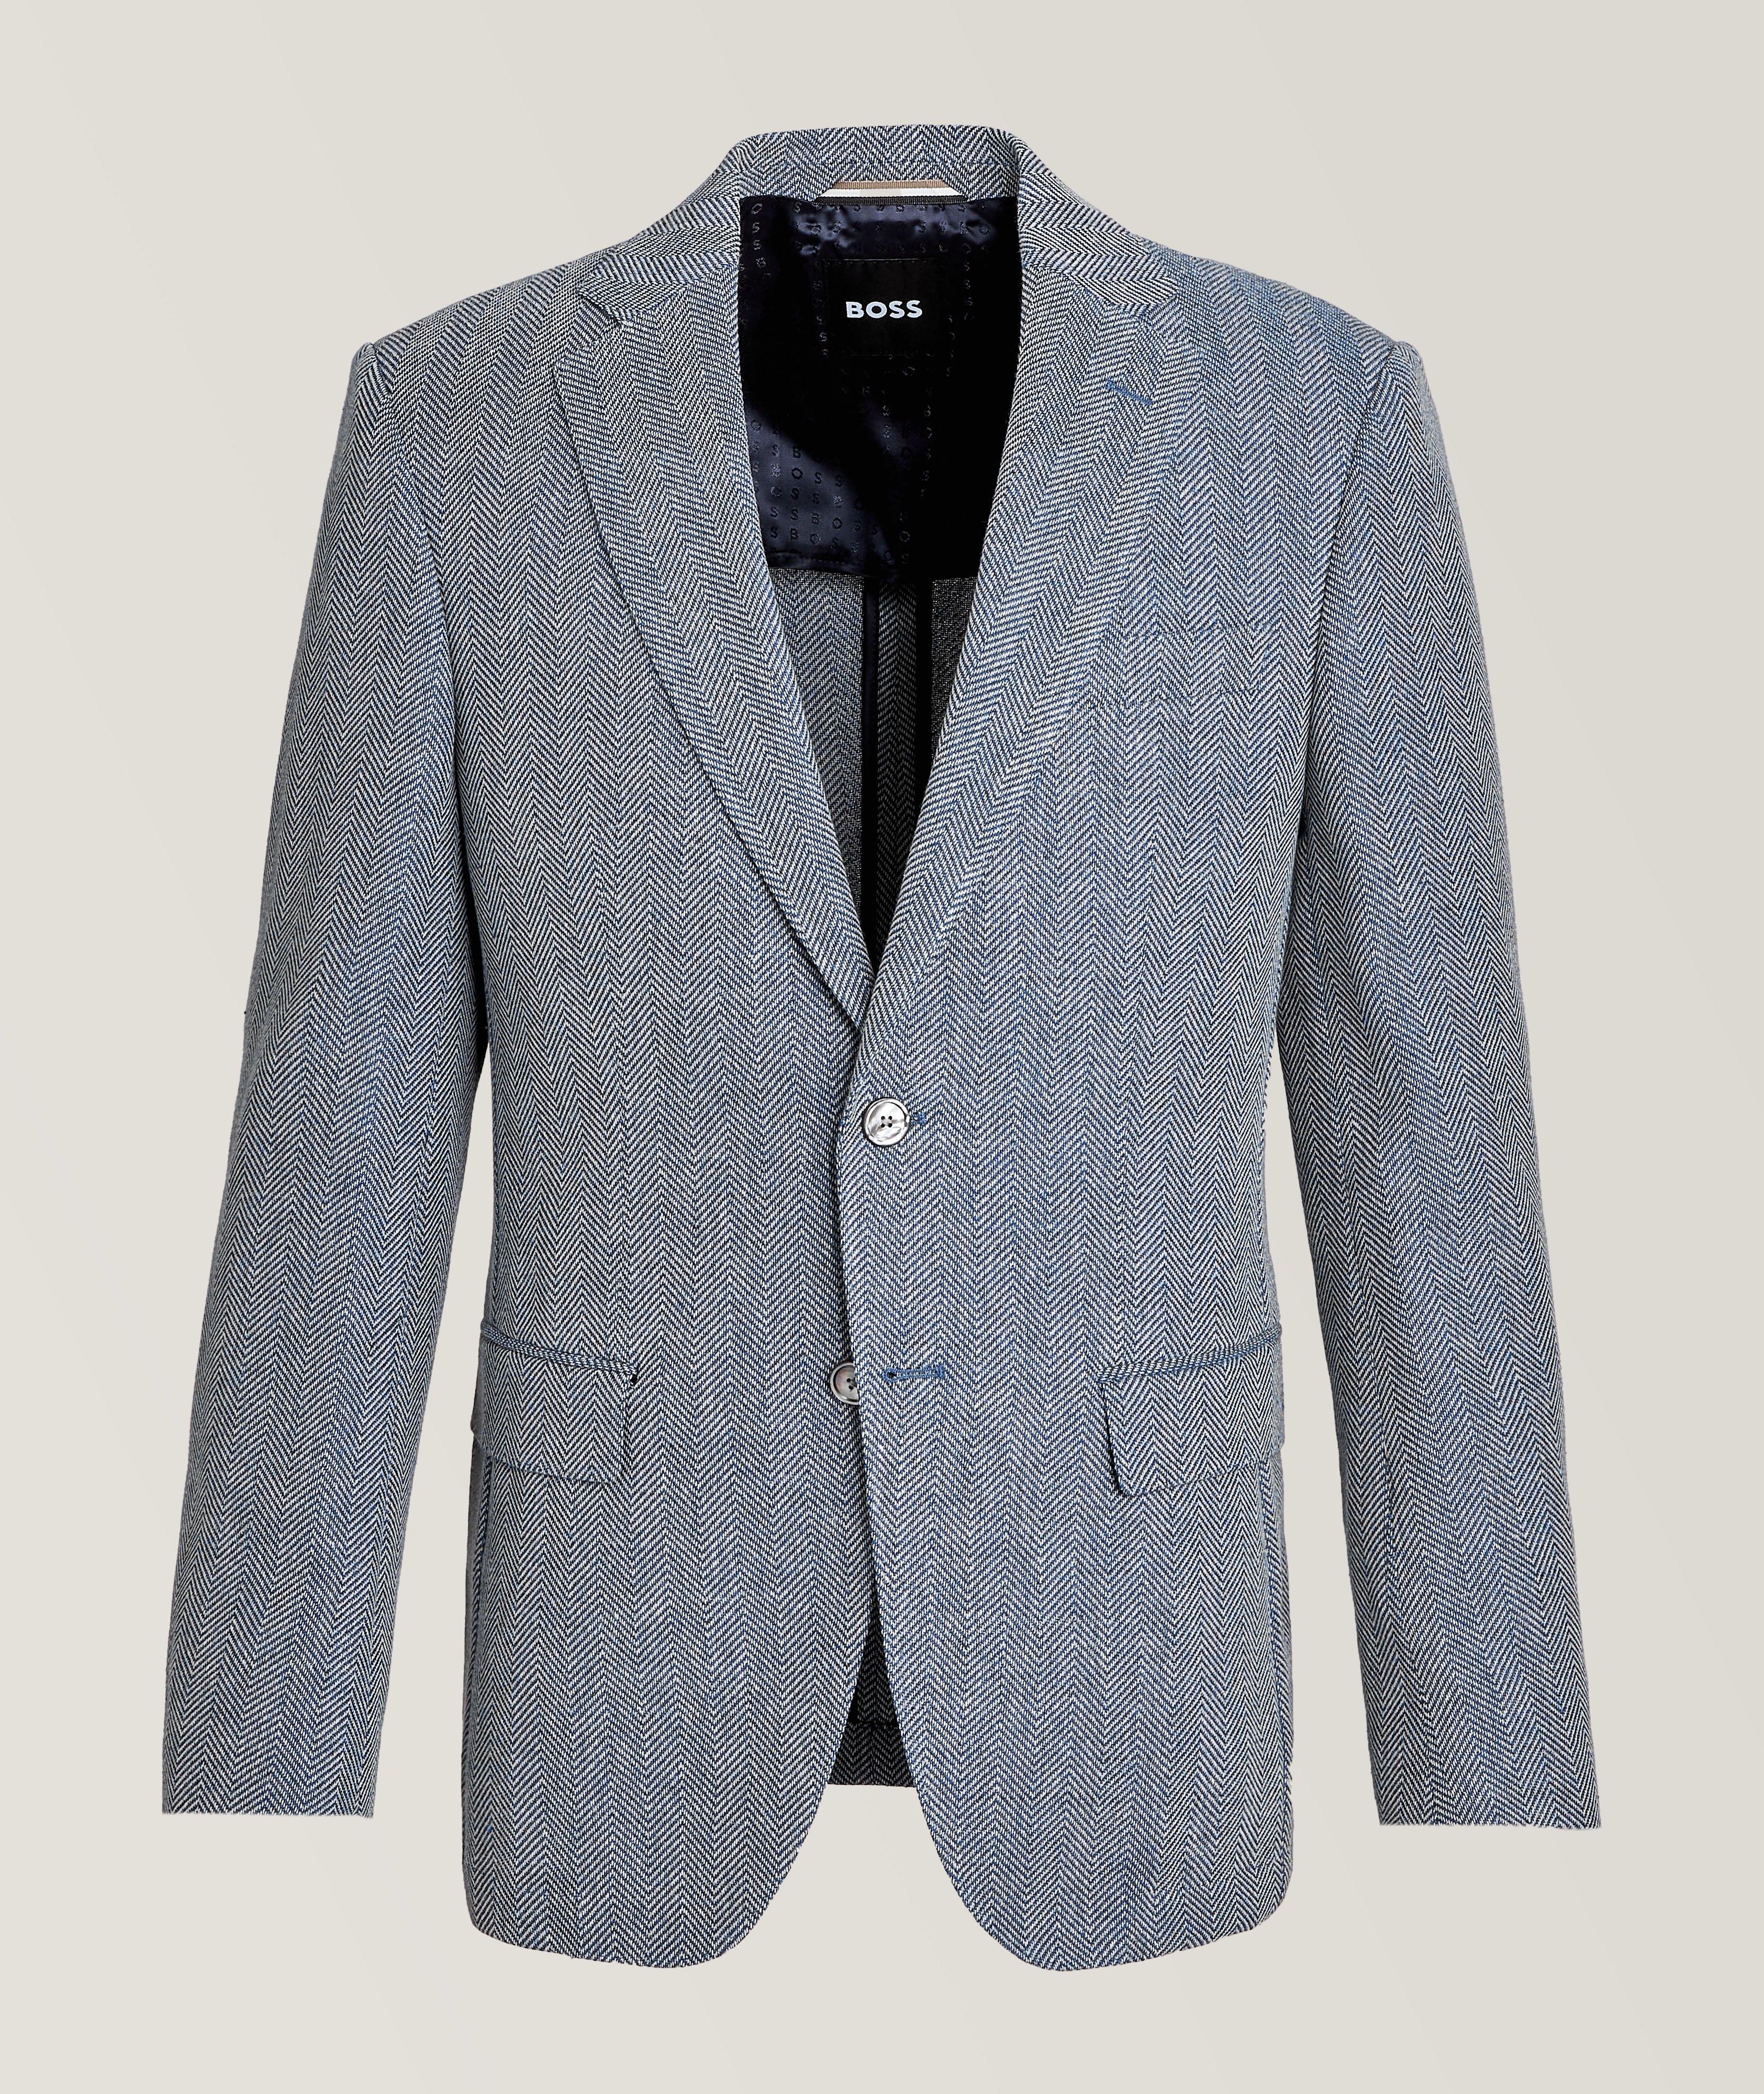 Hutson Herringbone Weave Cotton-Virgin Wool Sport Jacket  image 0